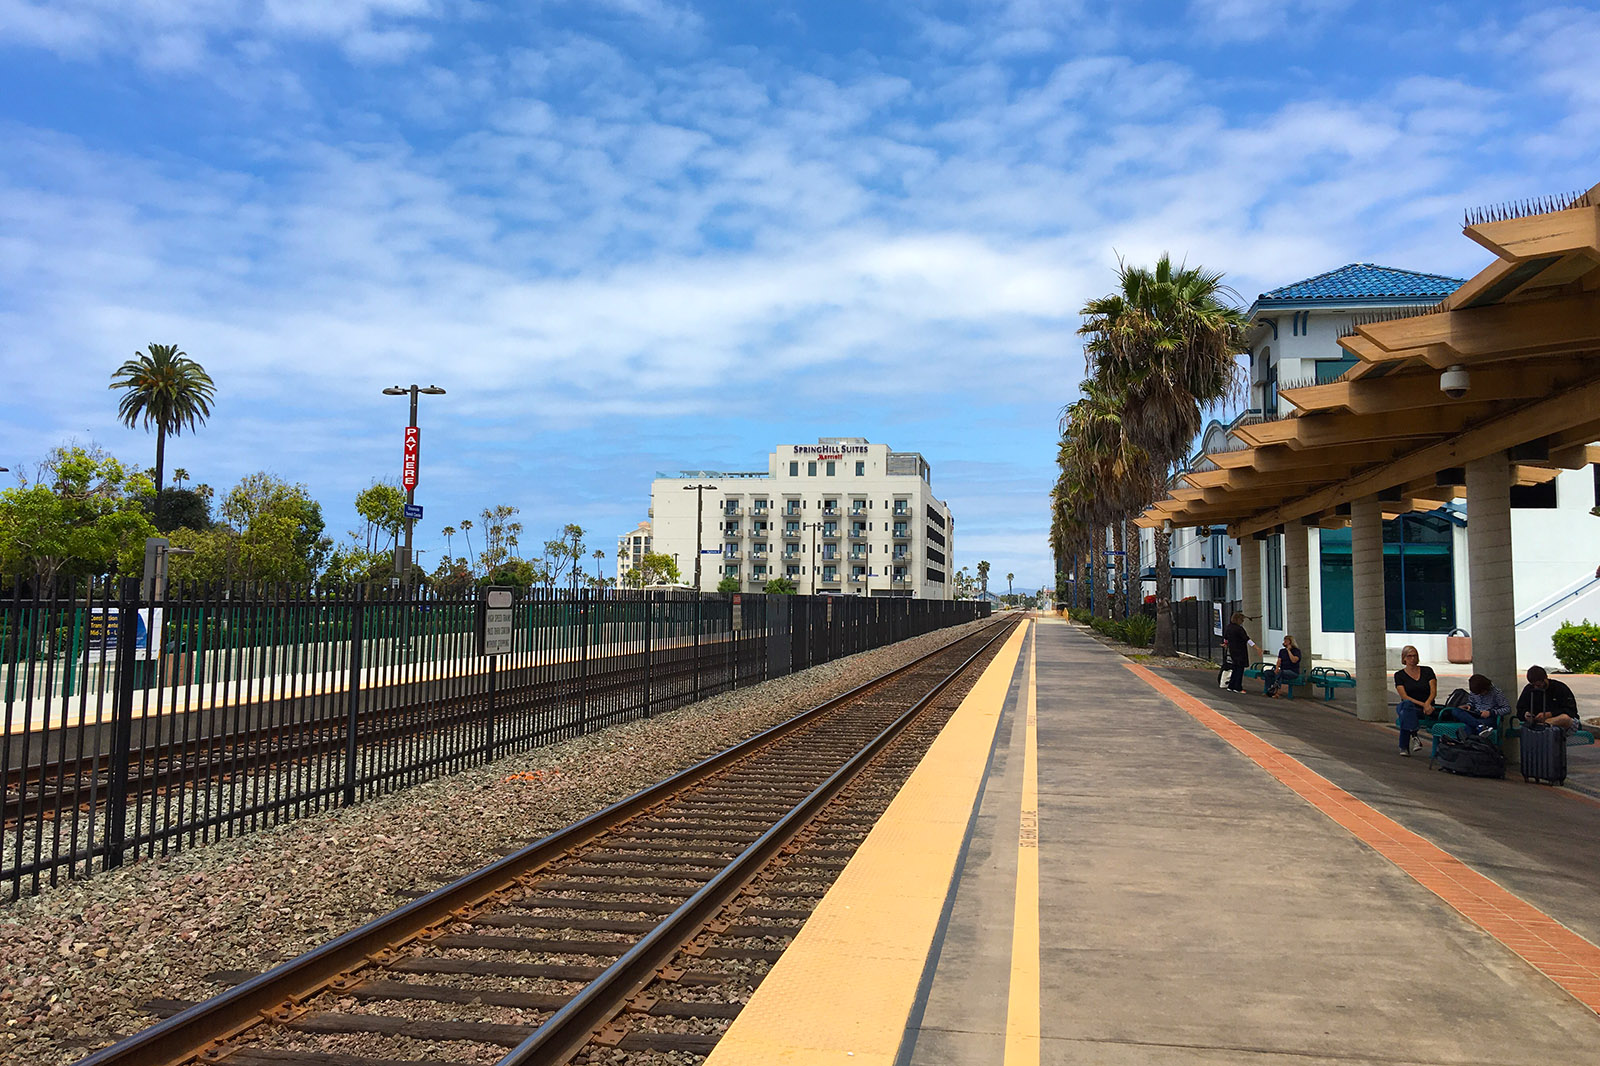 Amtrak-stationen i Oceanside, Kalifornien